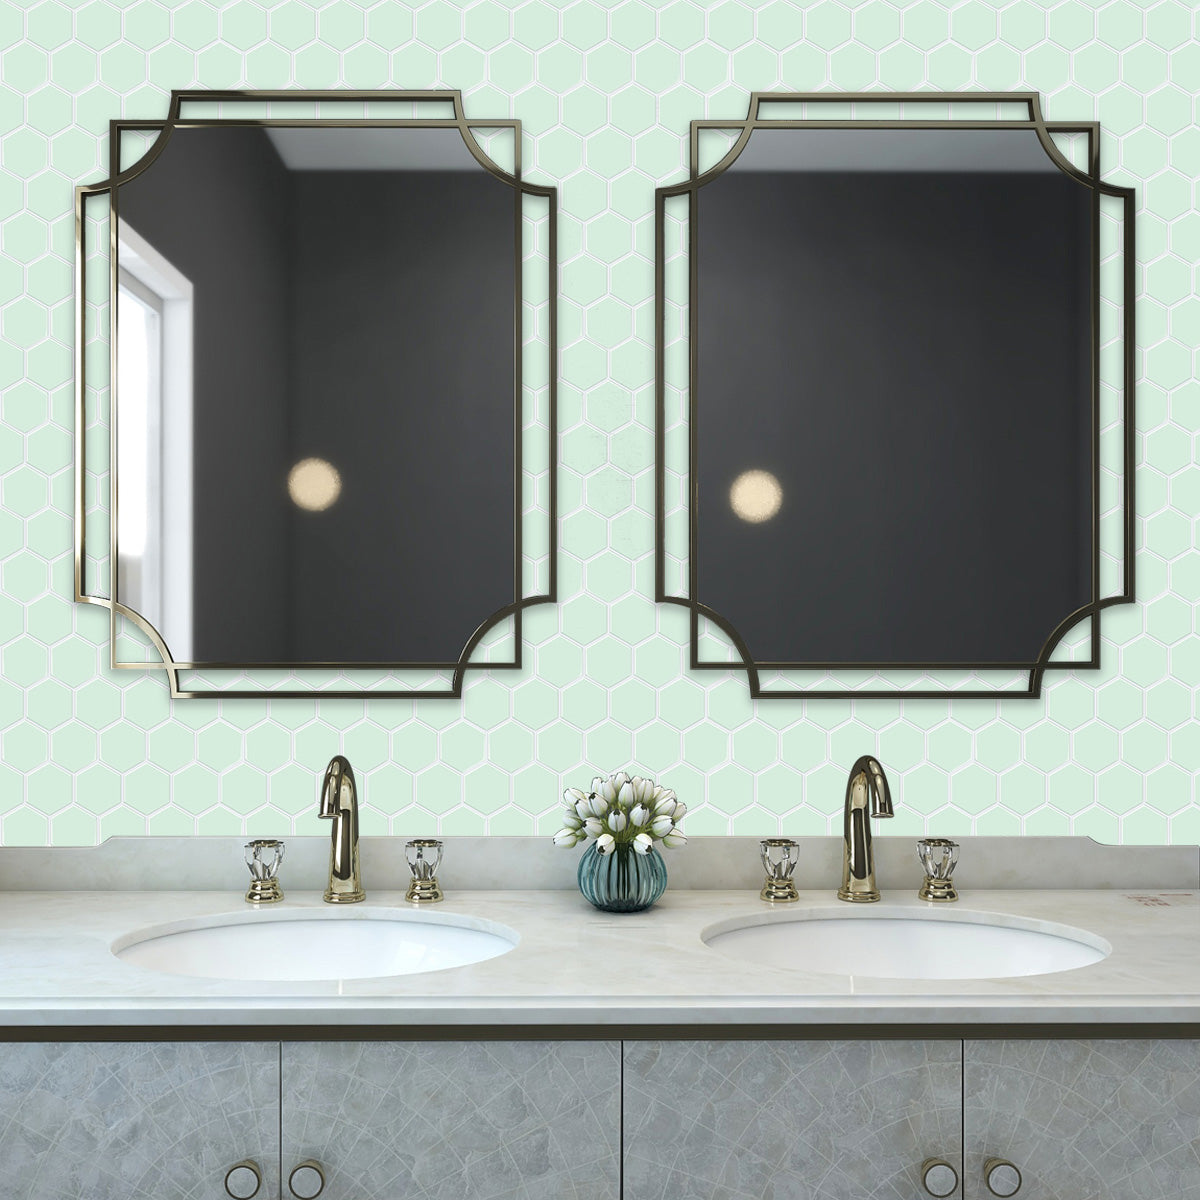 Mint green hexagon peel and stick tiles above a bathroom vanity